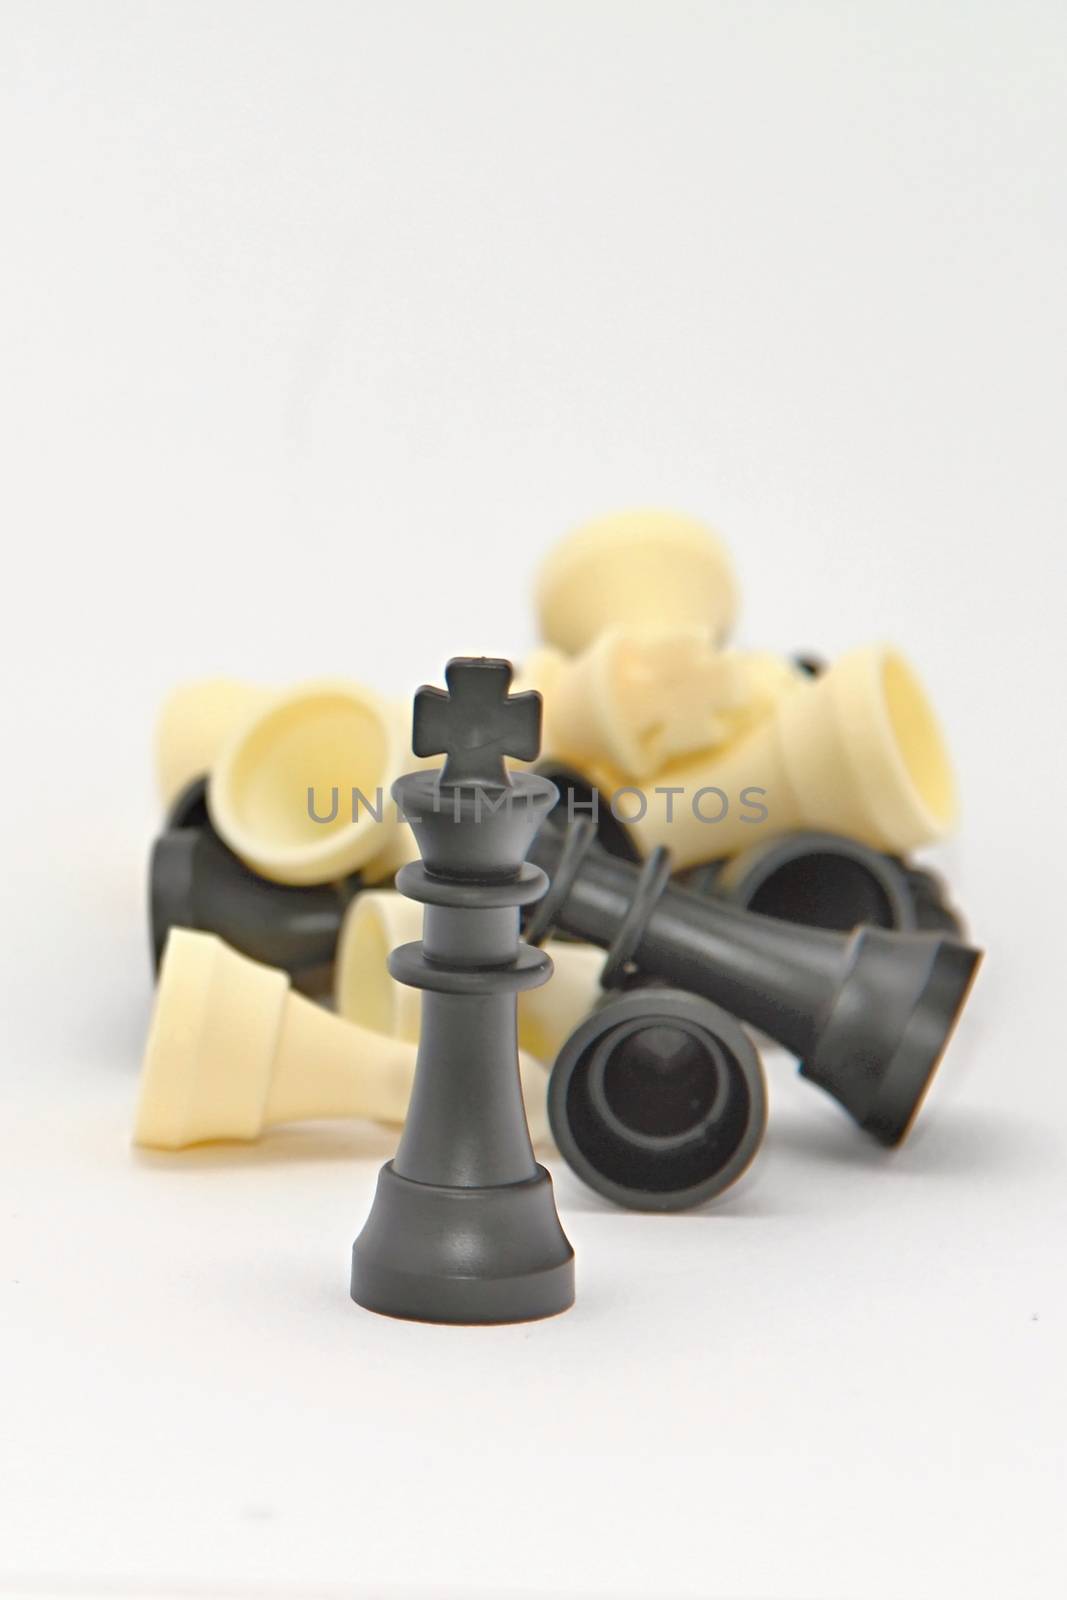 Chess Figurines by Dermot68